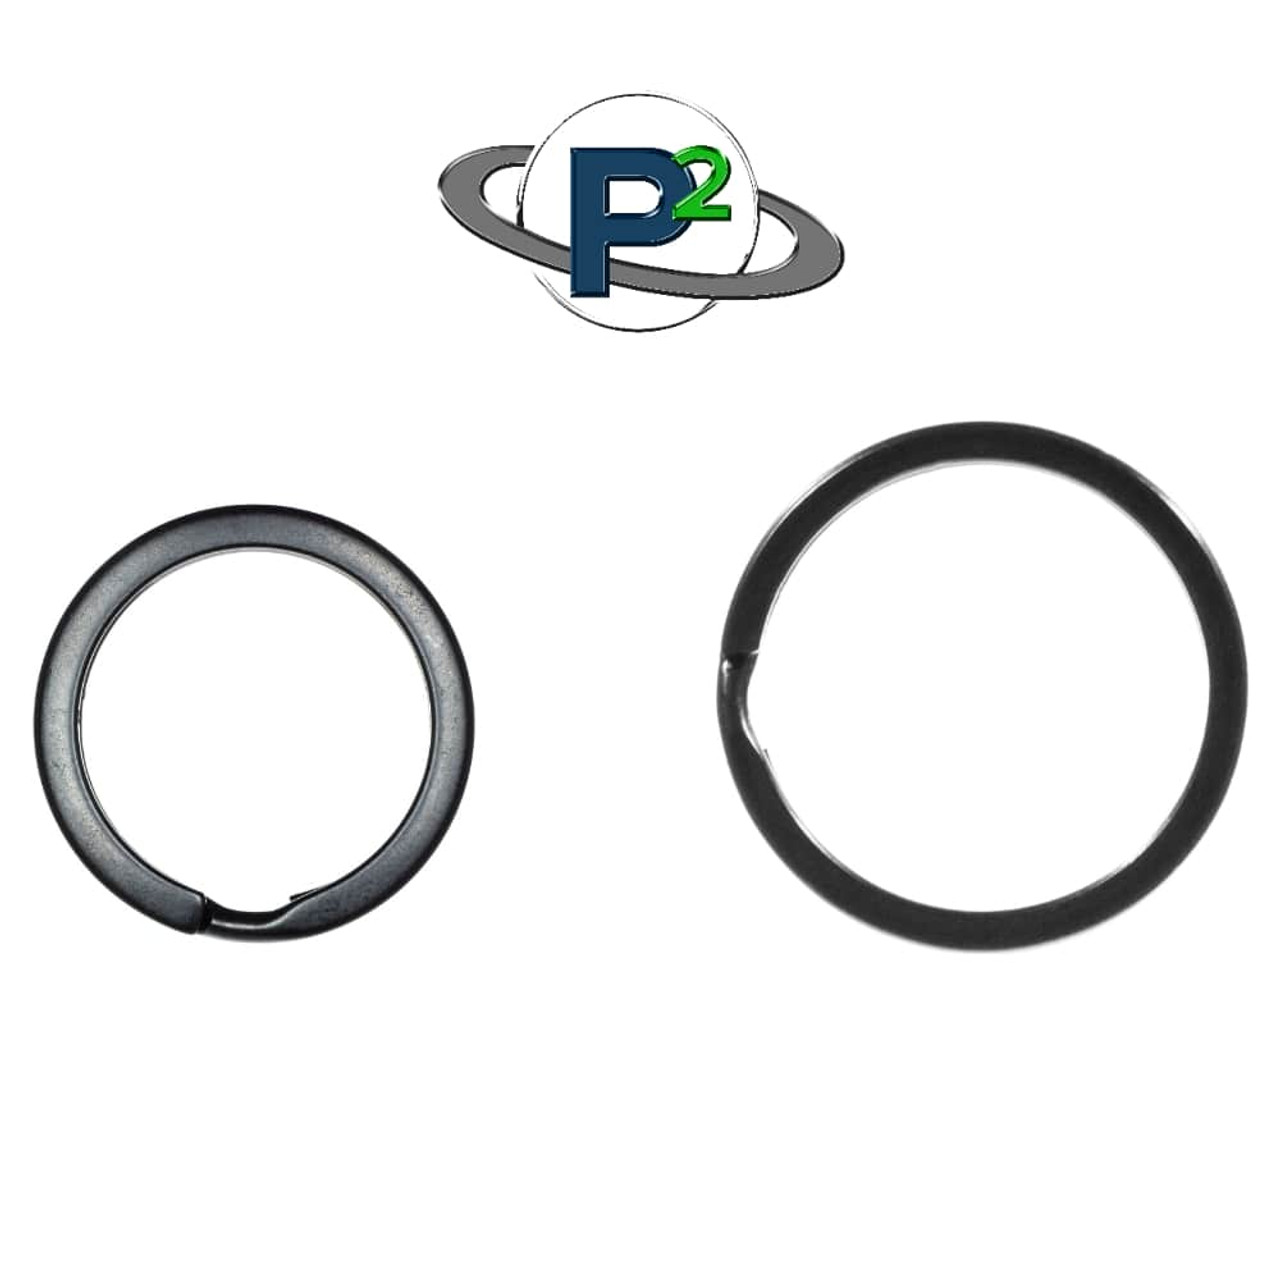 Ball Chain Manufacturing 35mm Black Split Key Rings